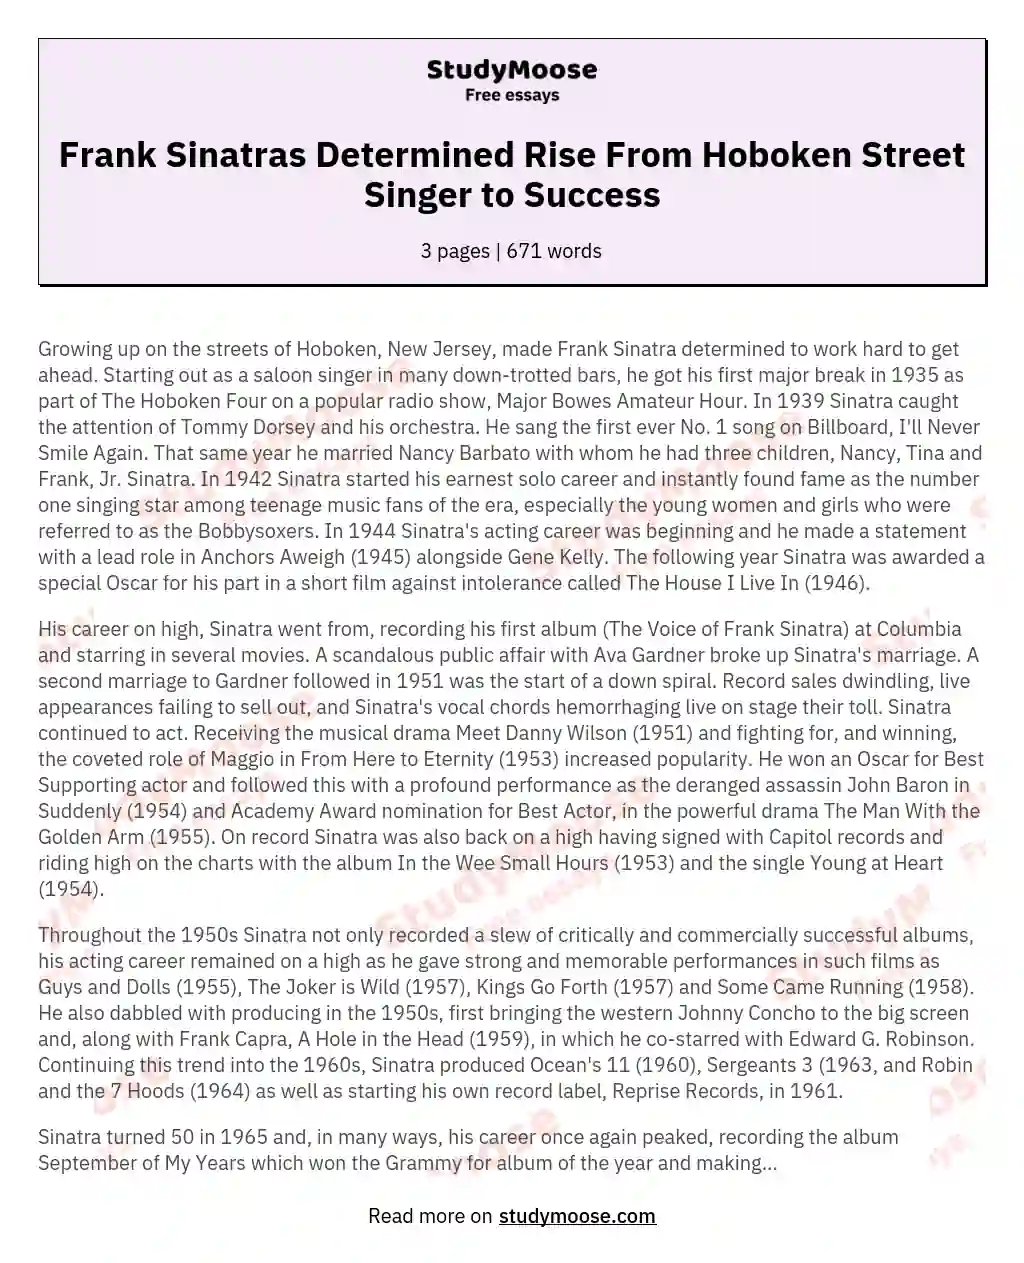 Frank Sinatras Determined Rise From Hoboken Street Singer to Success essay